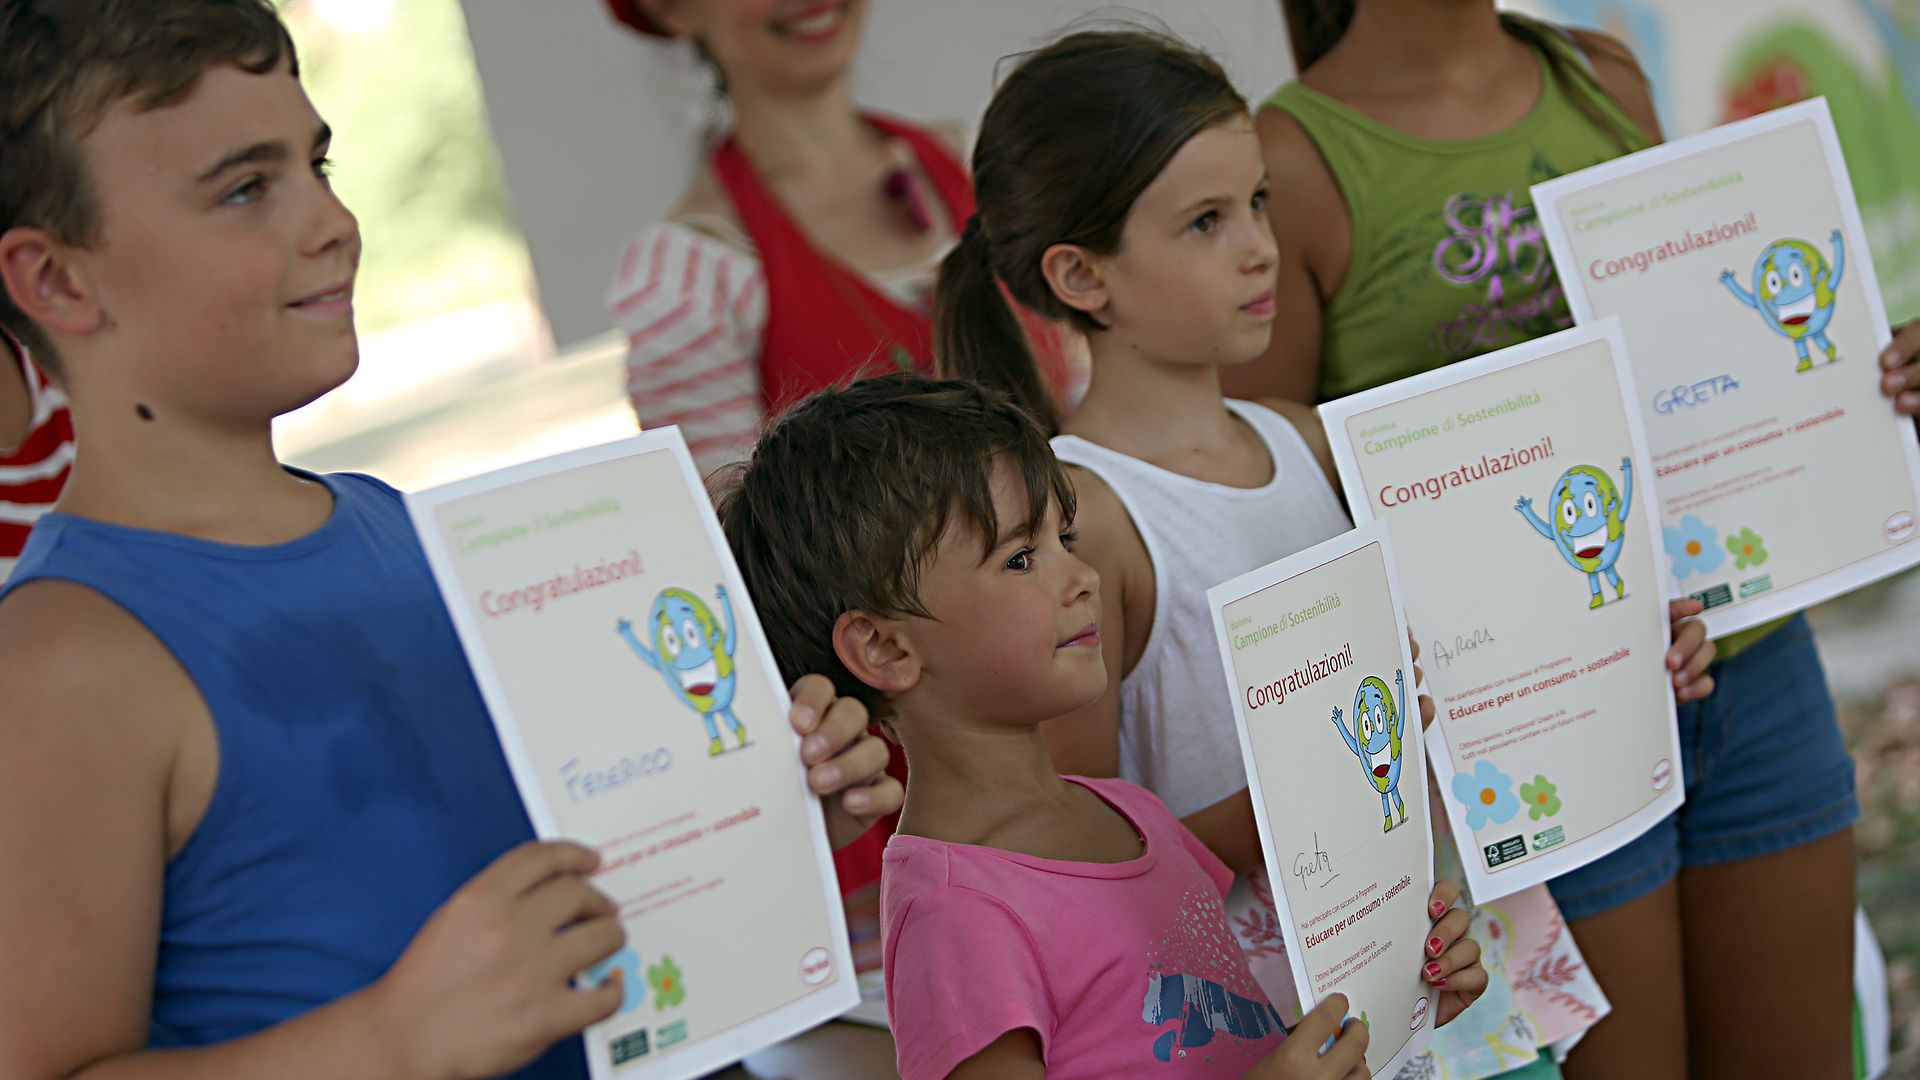 
Award Ceremony – Children receive sustainability certificates